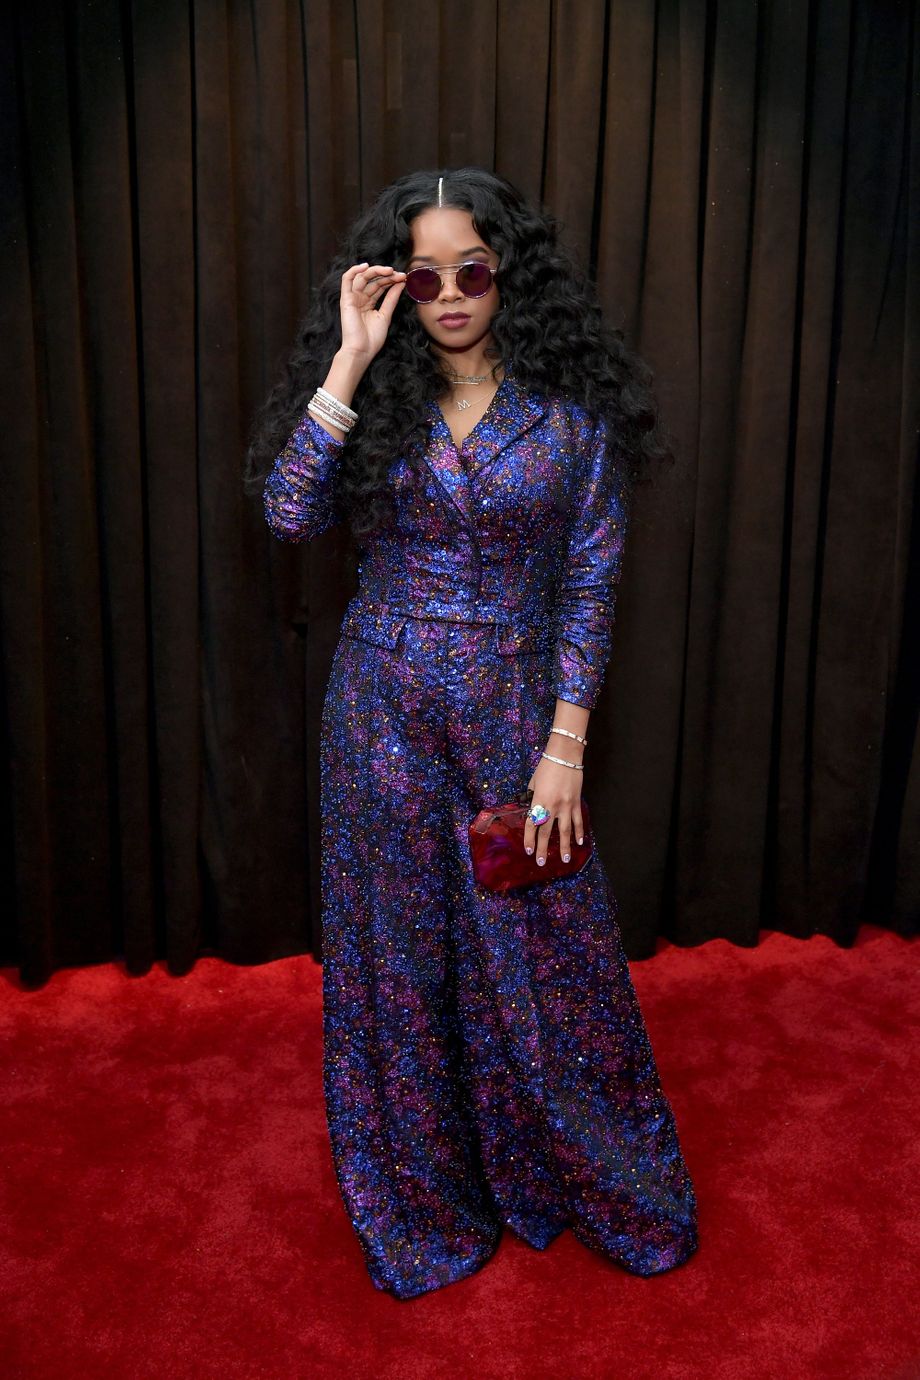 Grammys 2019: Red carpet arrivals, fashion including Alicia Keys, Cardi B,  Lady Gaga — Staples Center, Los Angeles — Grammy Awards